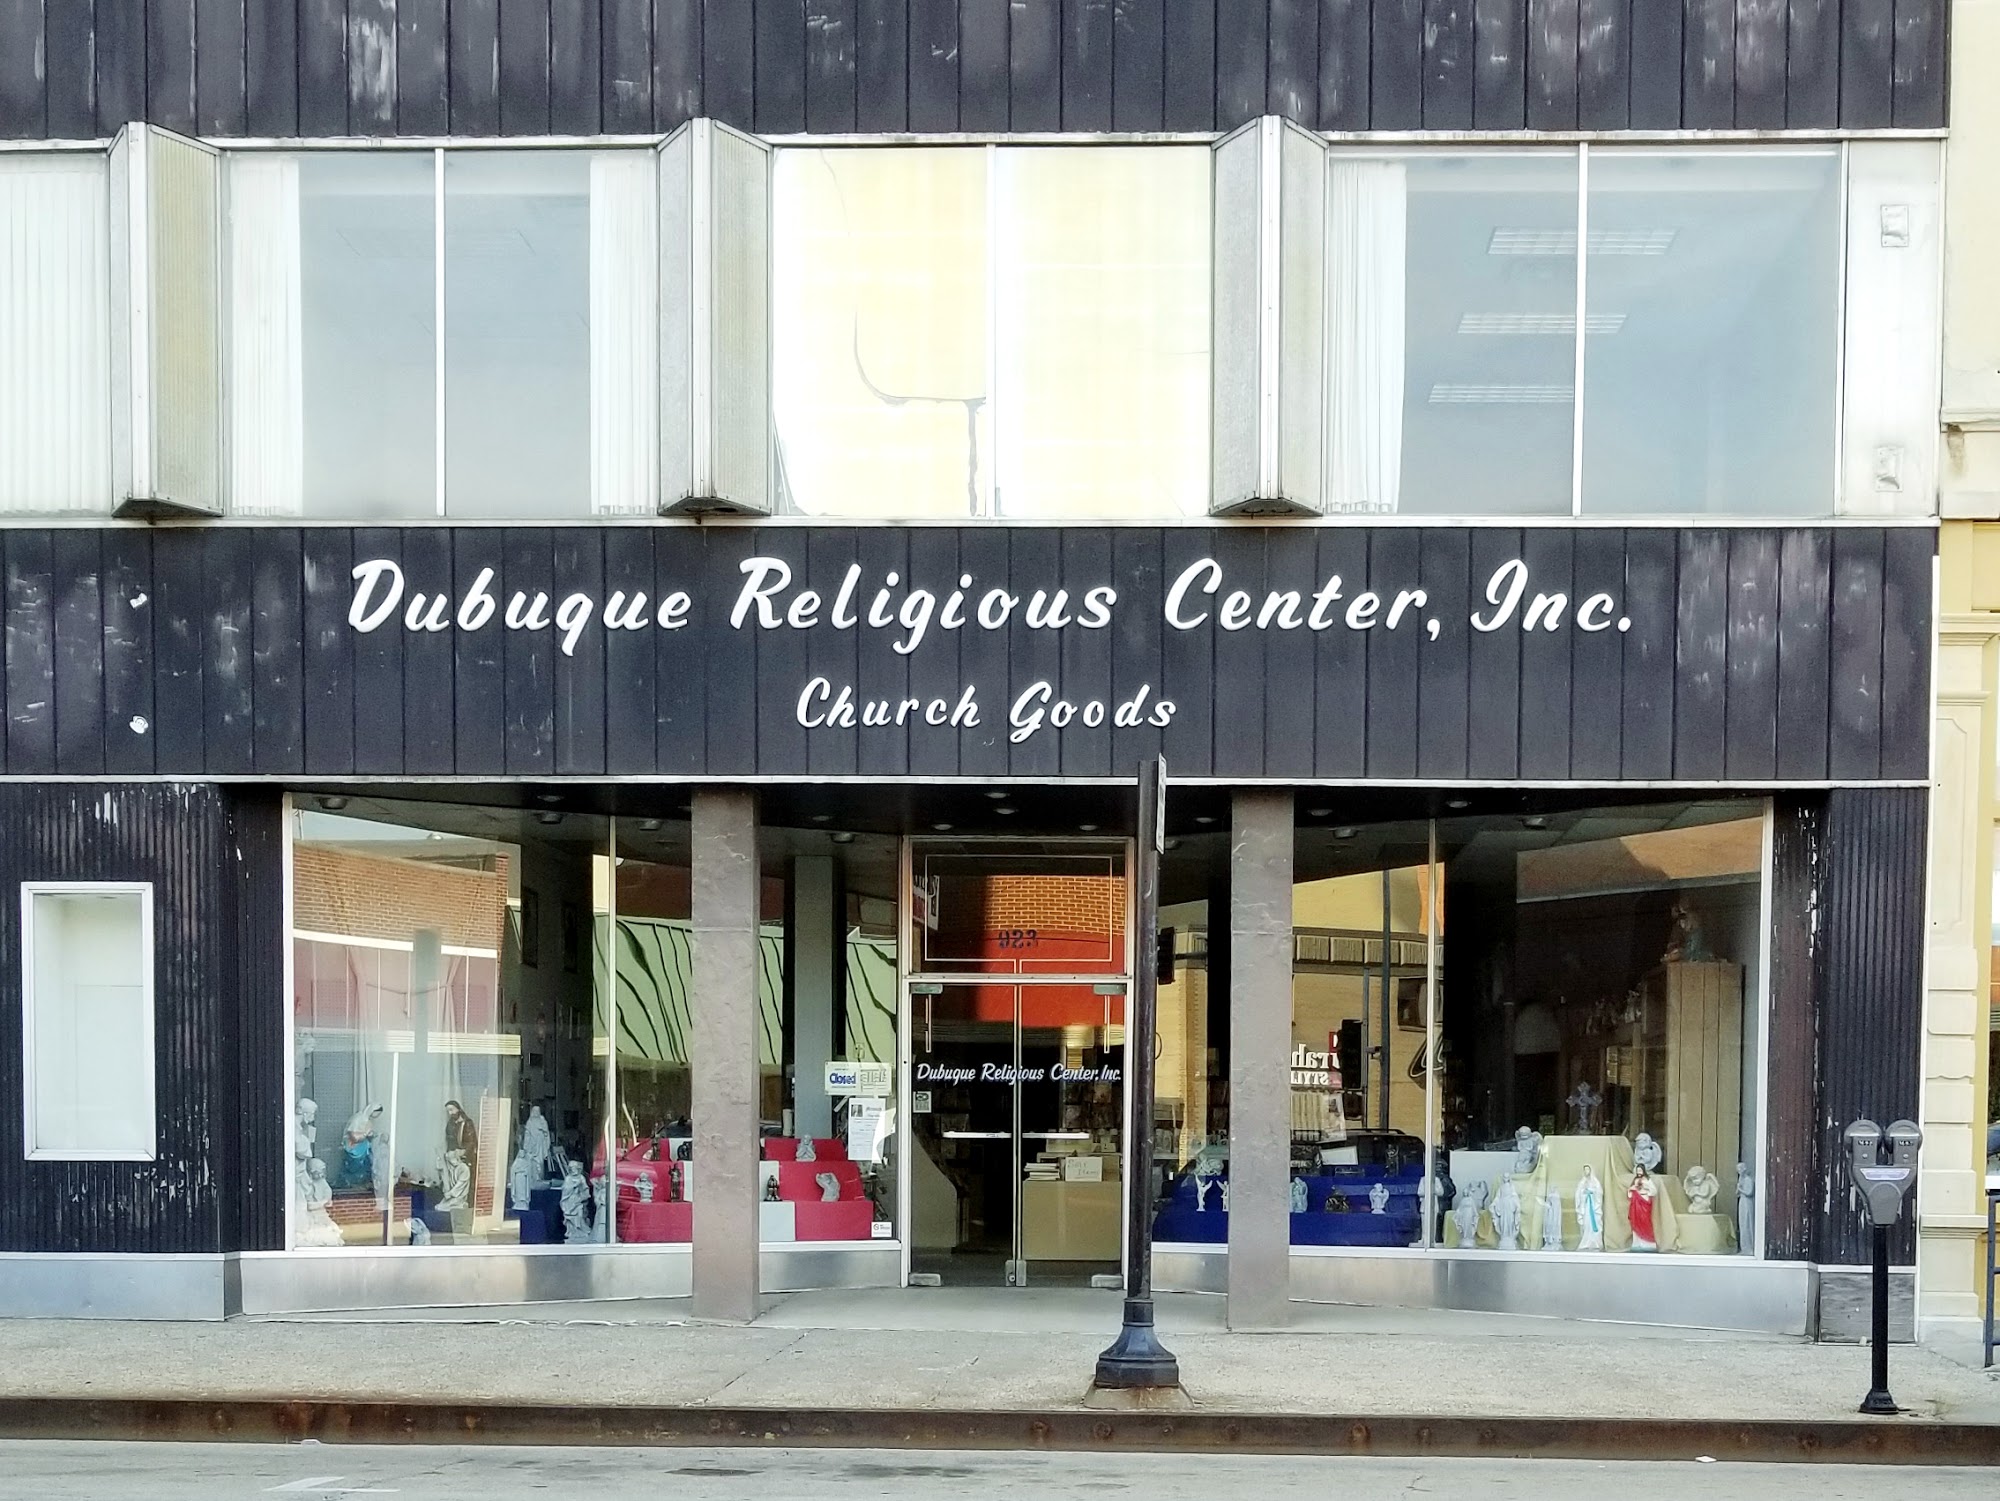 Dubuque Religious Center Inc.